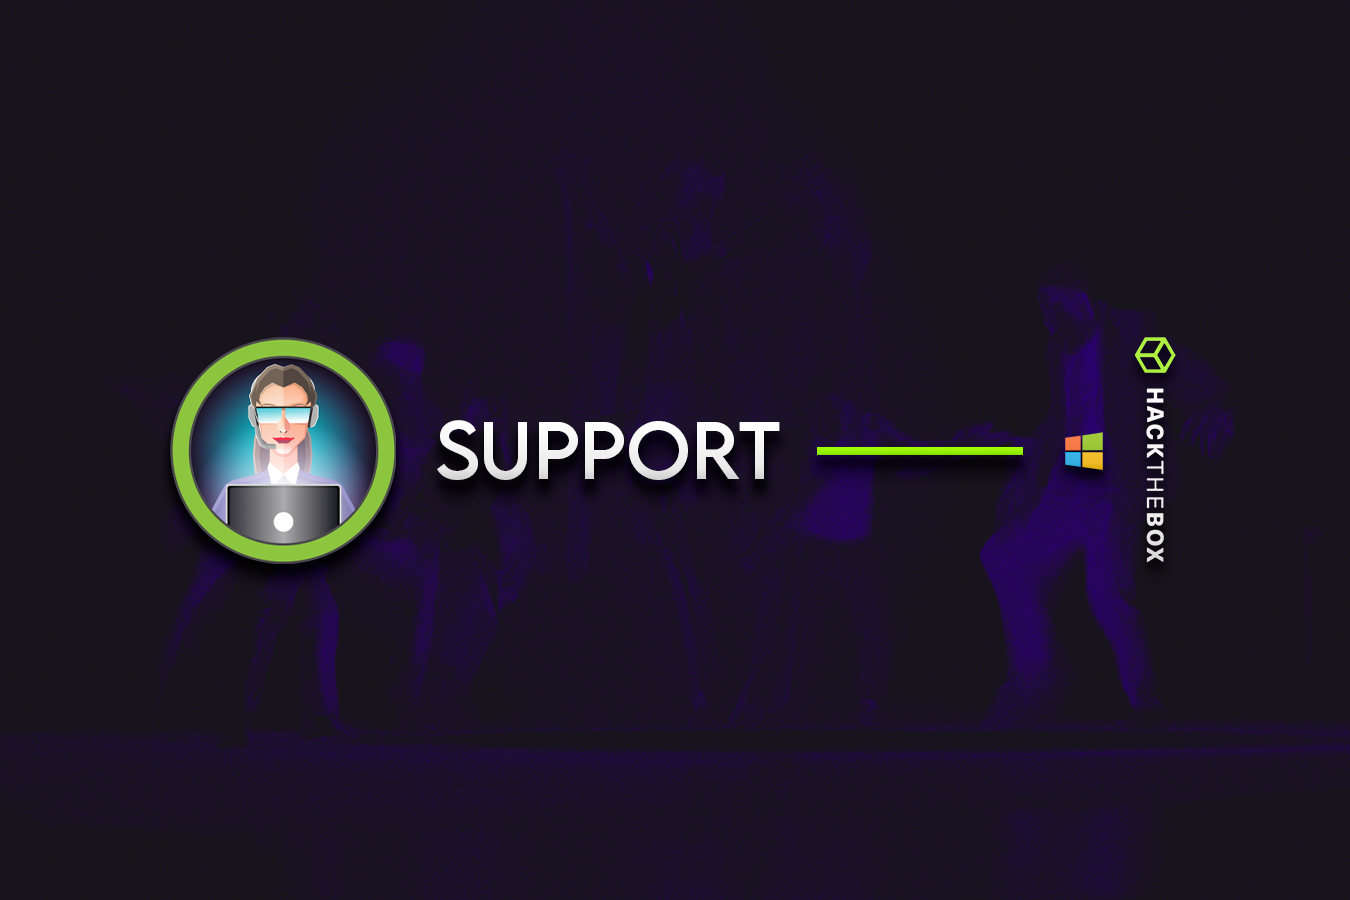 HackTheBox - Support